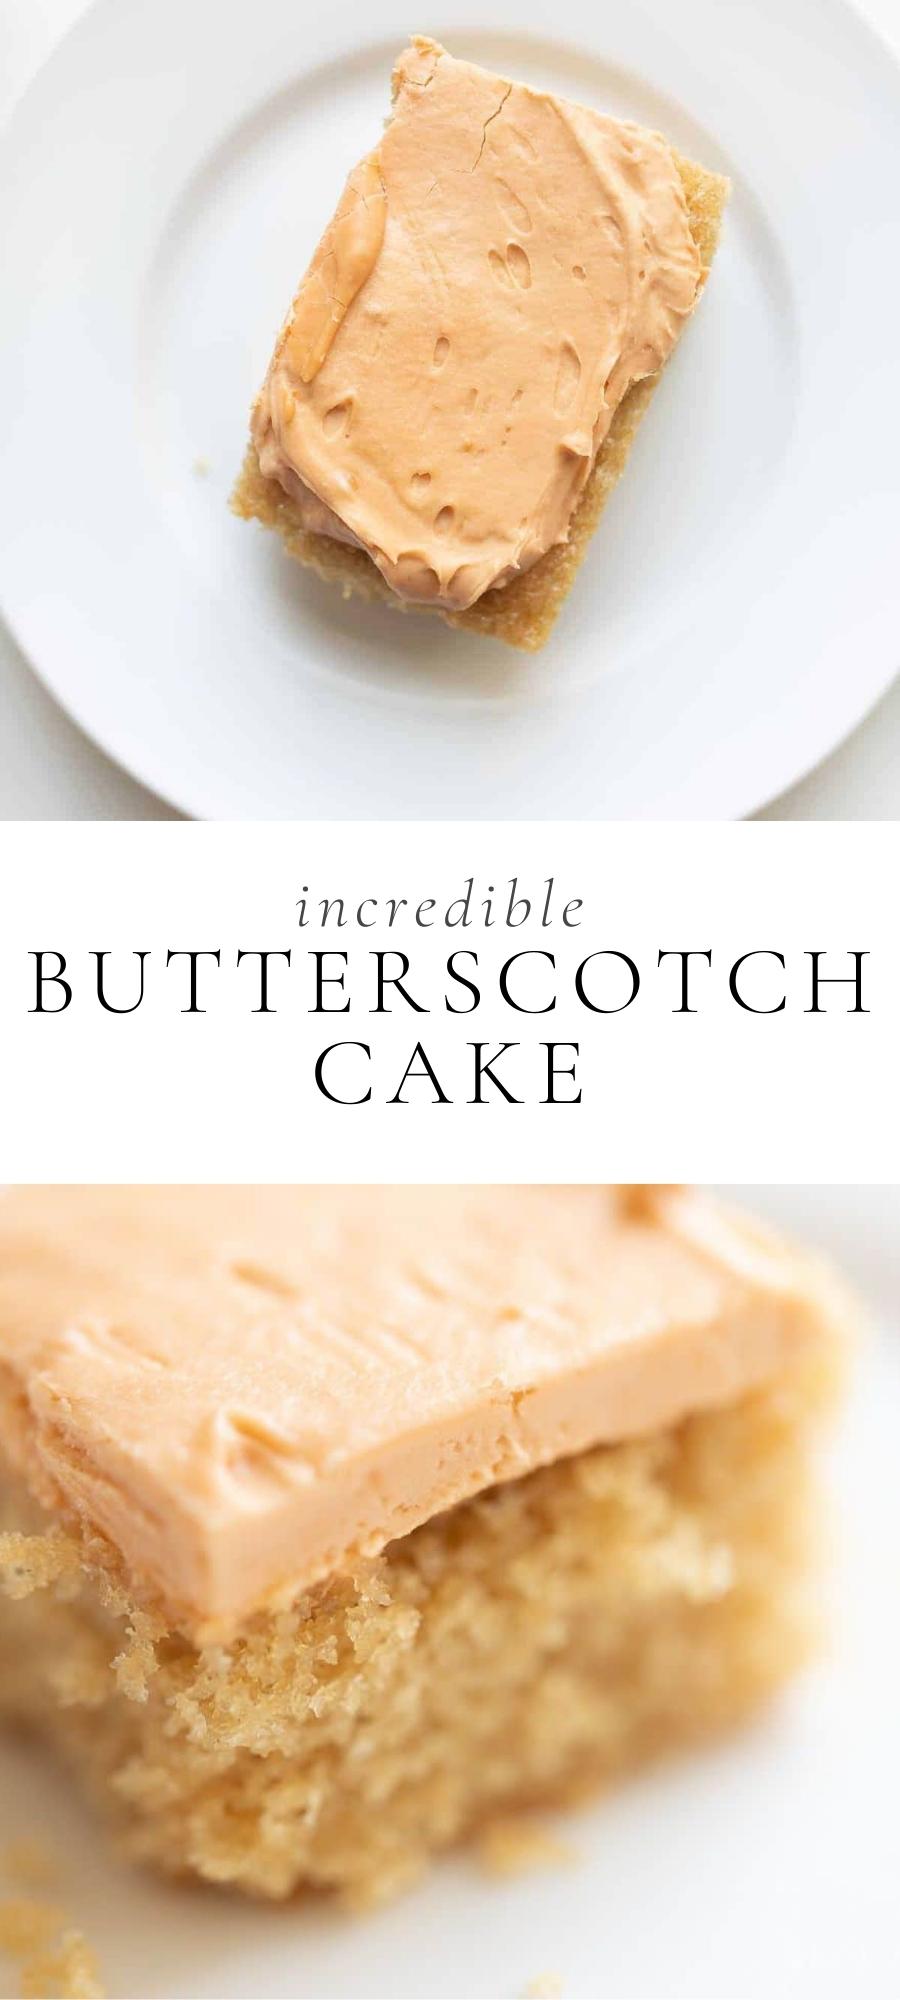 butterscotch cake on plate